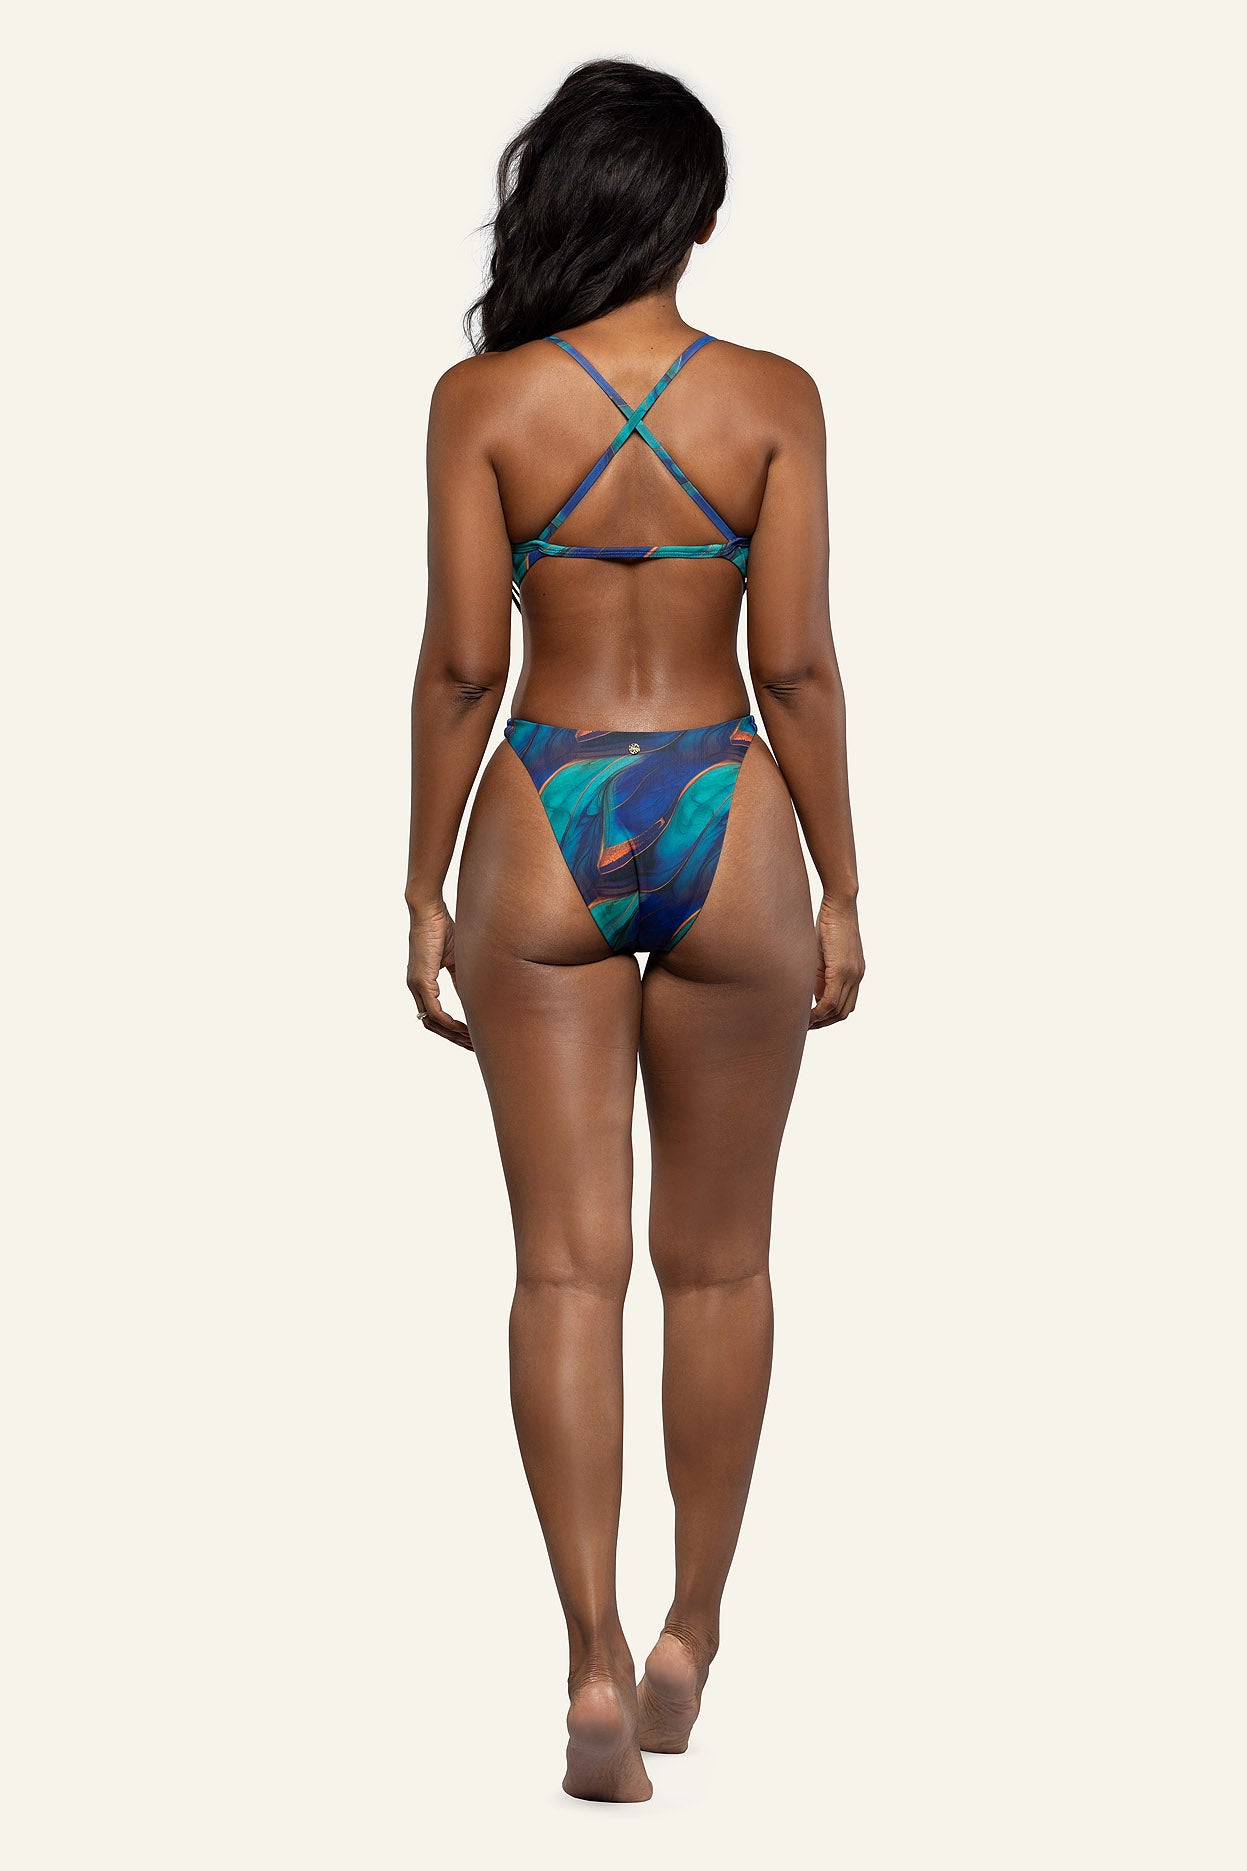 OMGEEE!!🔥 We have some heat Dropping - Asherah Swimwear